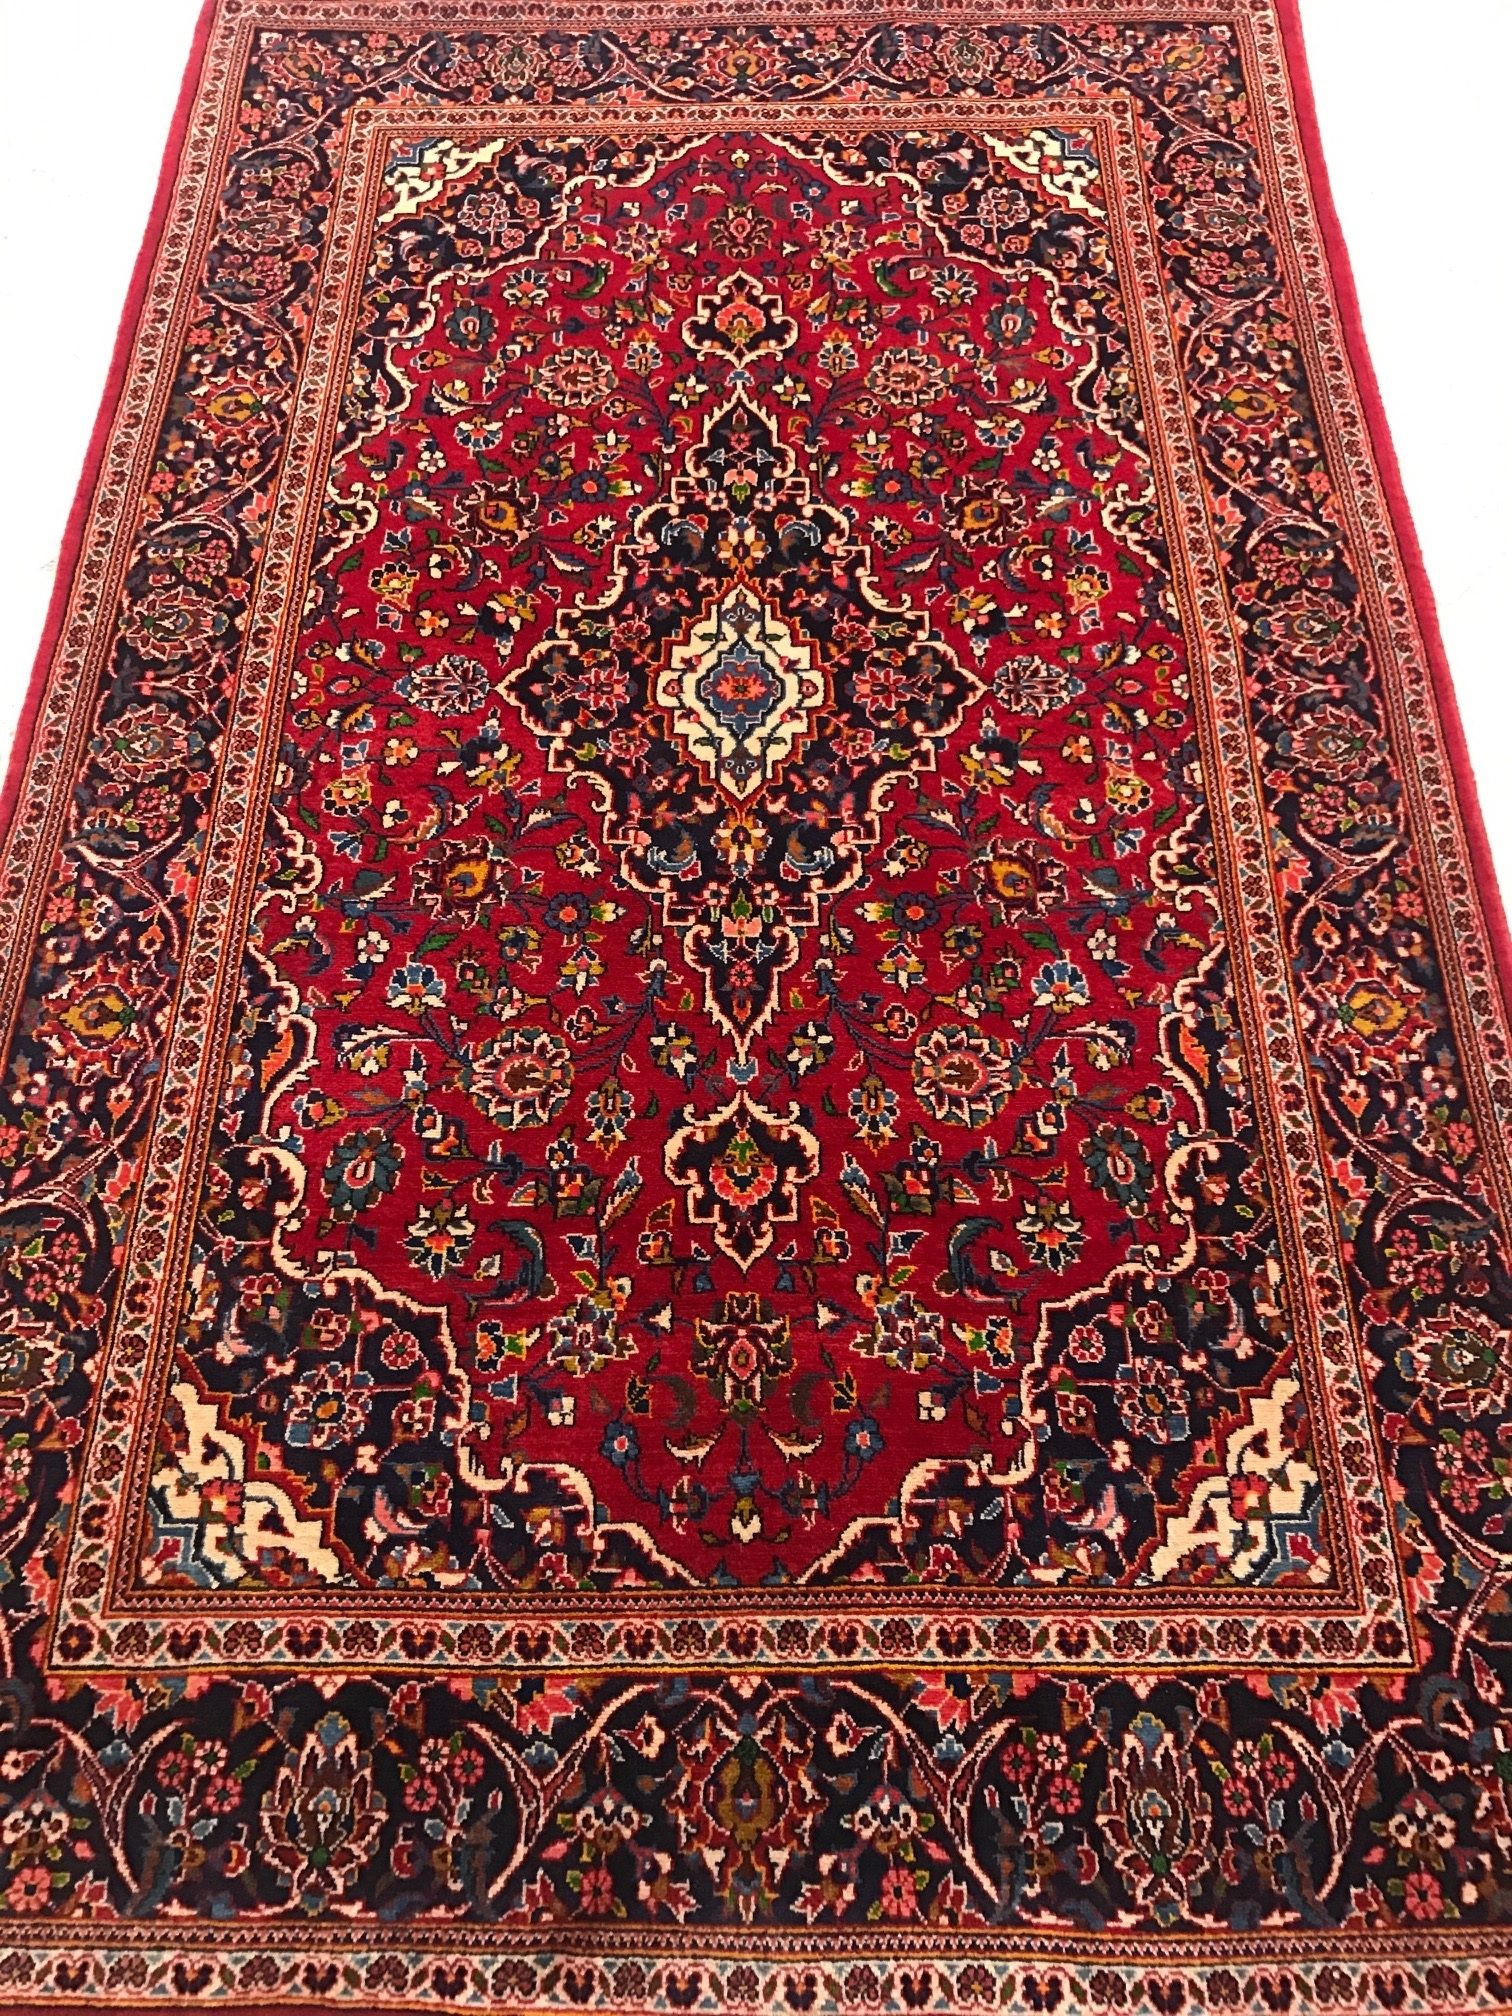 4'.6 x 7.3 ft Rouge Vintage carpet | Afghan Woolen | Rugsandbeyond